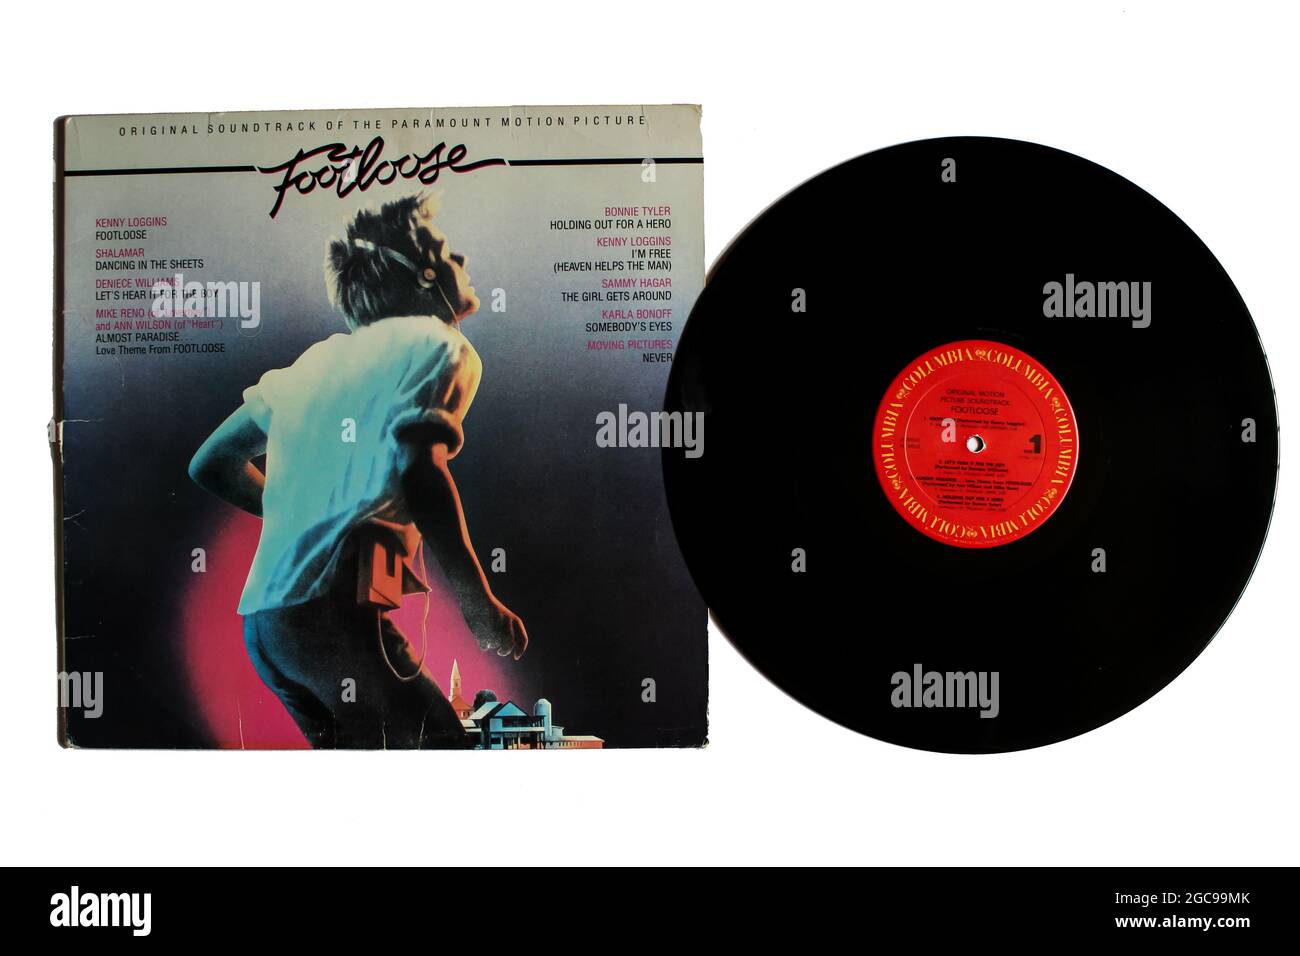 Footloose Original Soundtrack des Paramount Motion Picture Footloose. Musikalbum auf Vinyl-Schallplatte. Albumcover Stockfoto